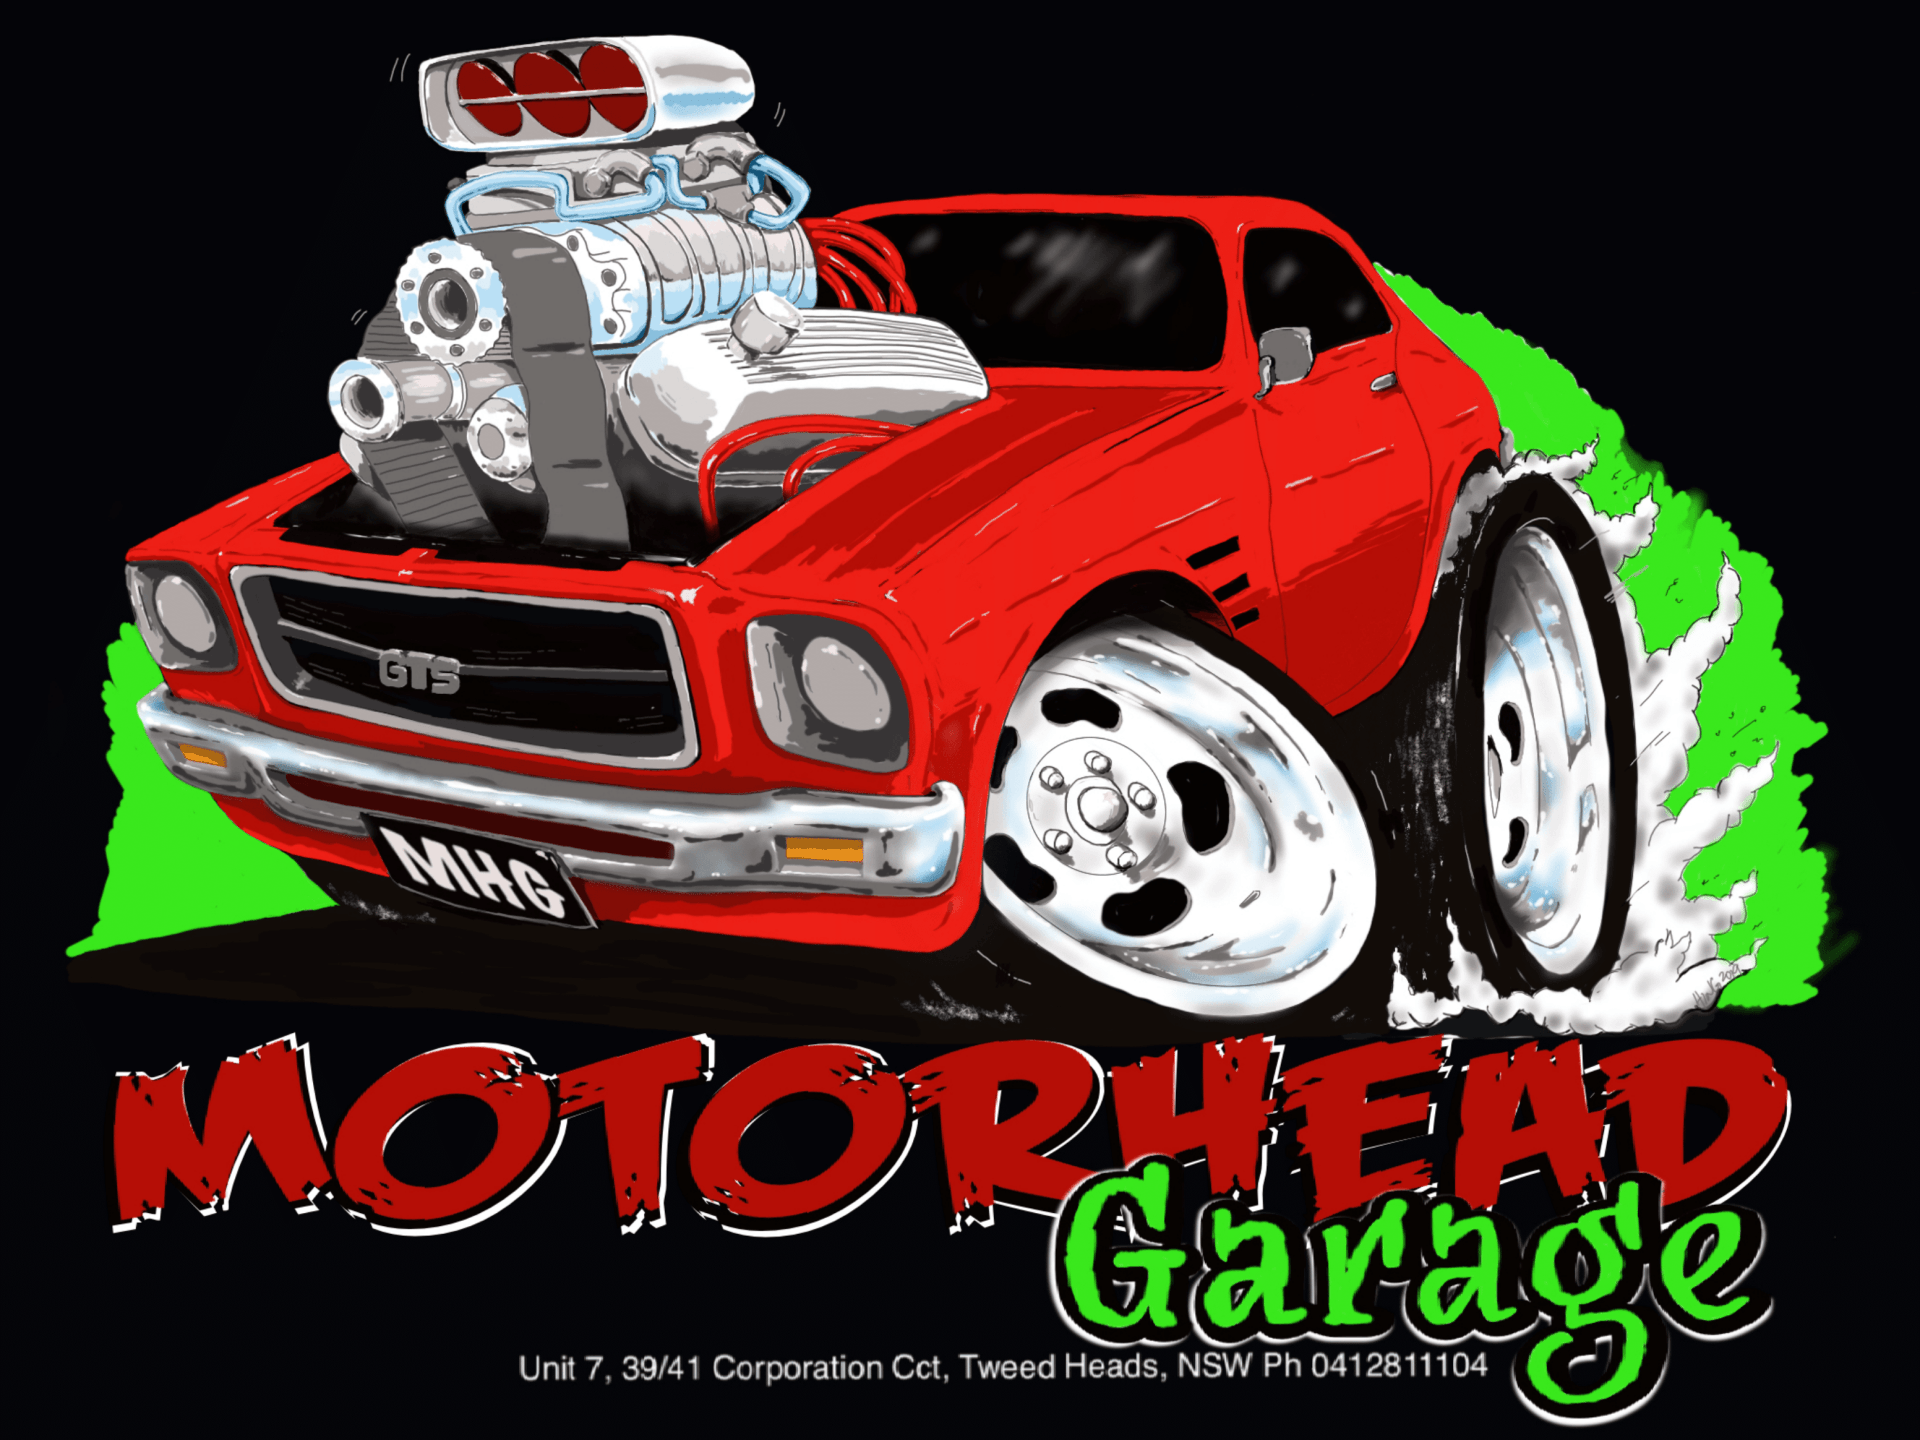 Motorhead Garage: Your Local Mechanics in Tweed Heads South